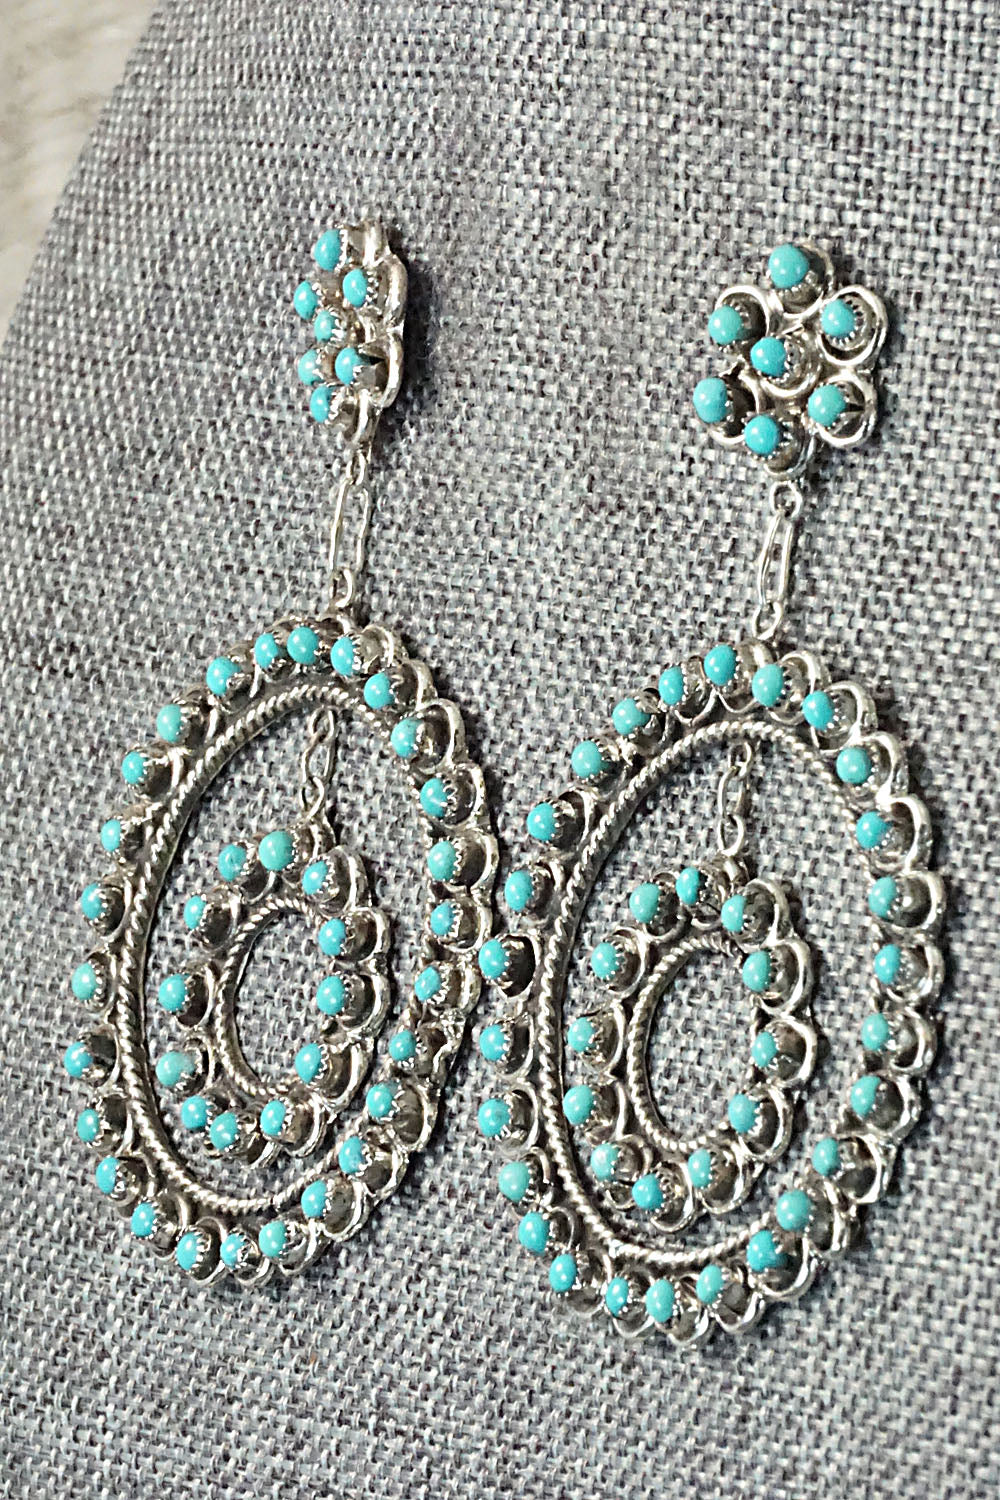 Turquoise & Sterling Silver Pendant and Earrings Set - Waylon Johnson